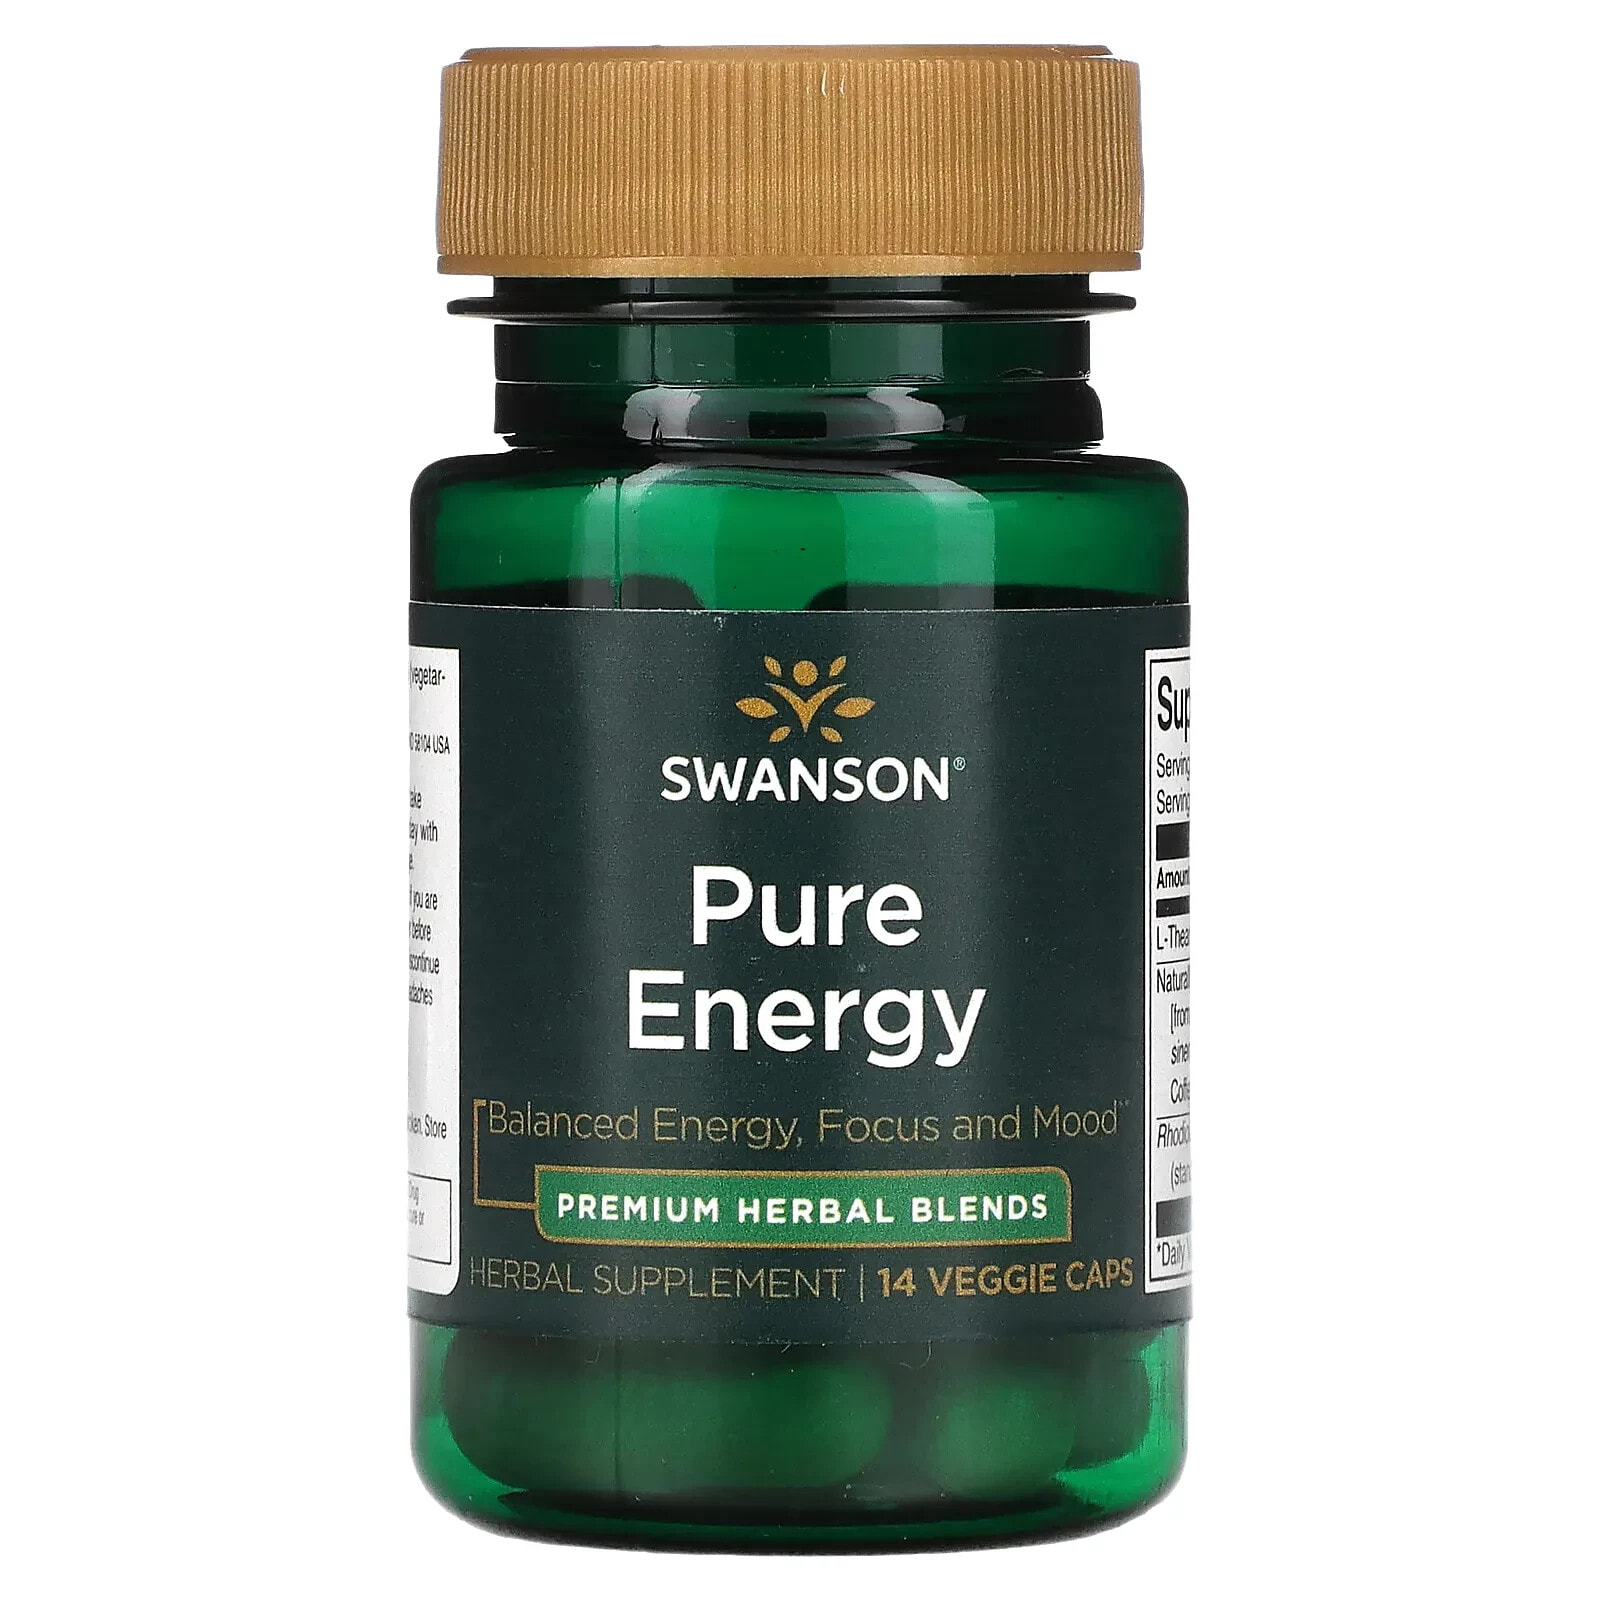 Swanson, Pure Energy, 60 Veggie Capsules